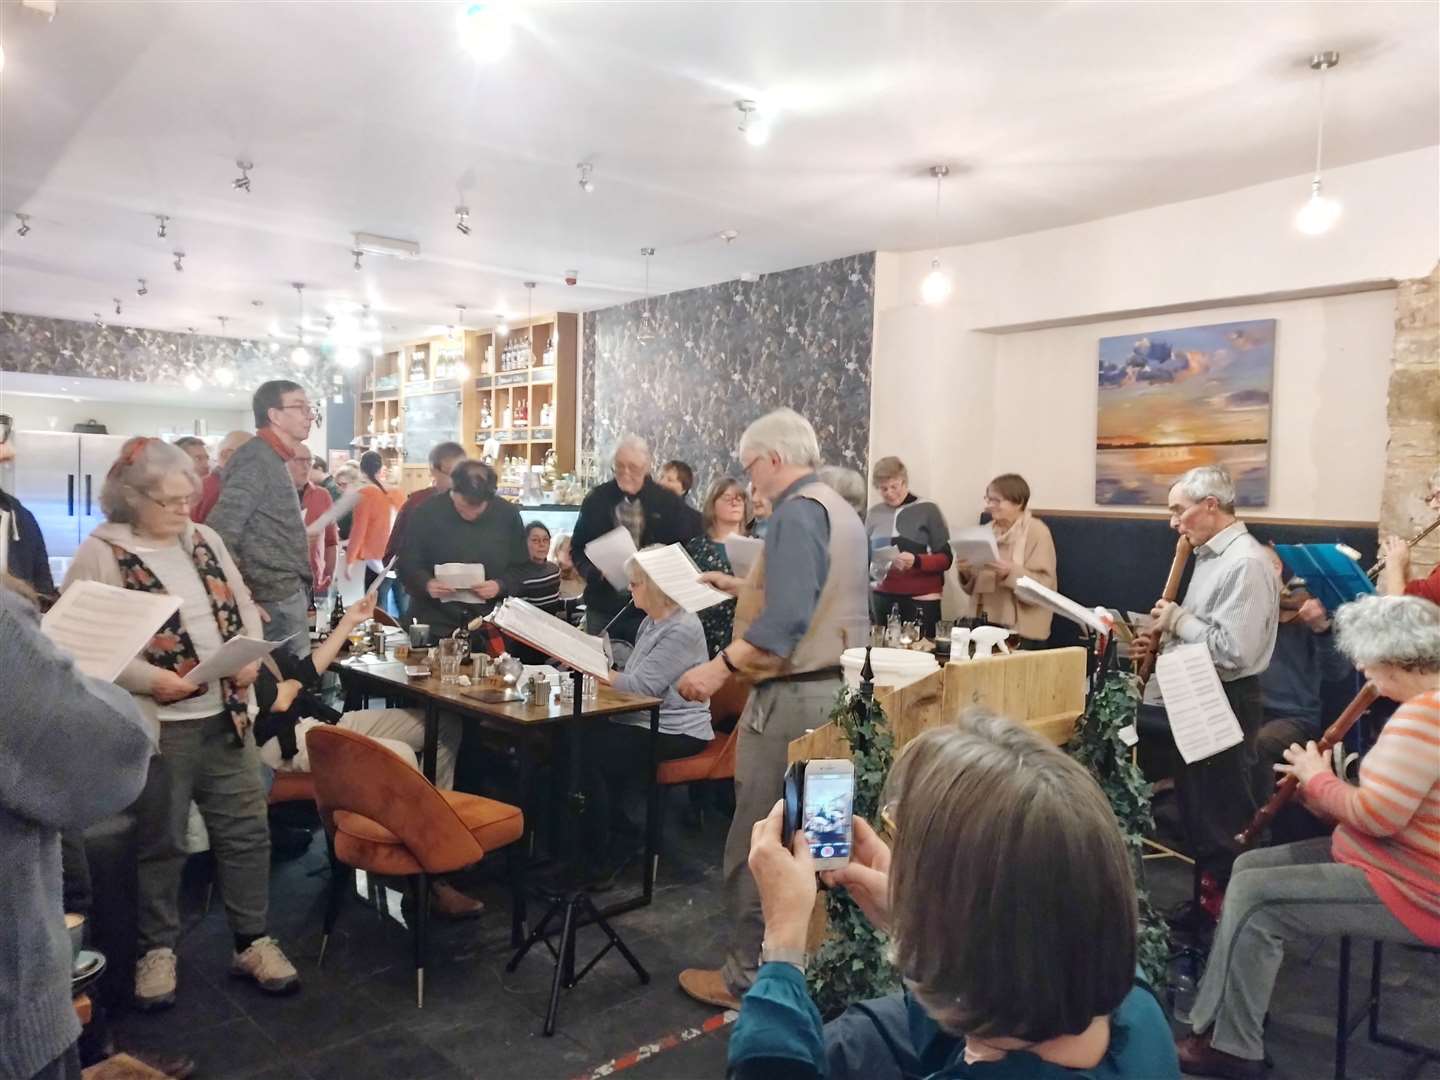 The first carol singing session at Café 1496 last December.